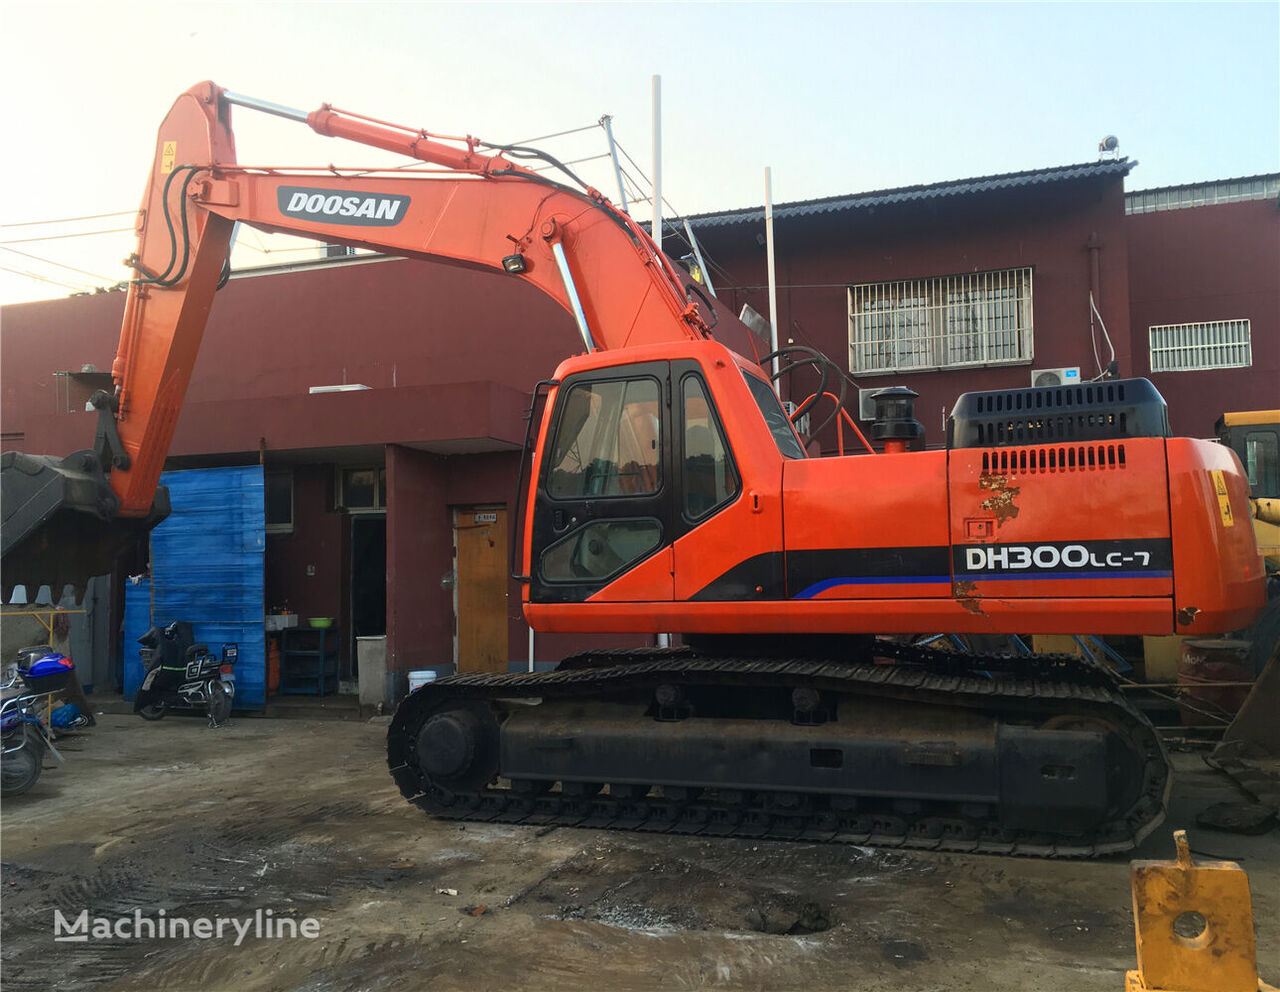 Doosan DH300LC-7 tracked excavator